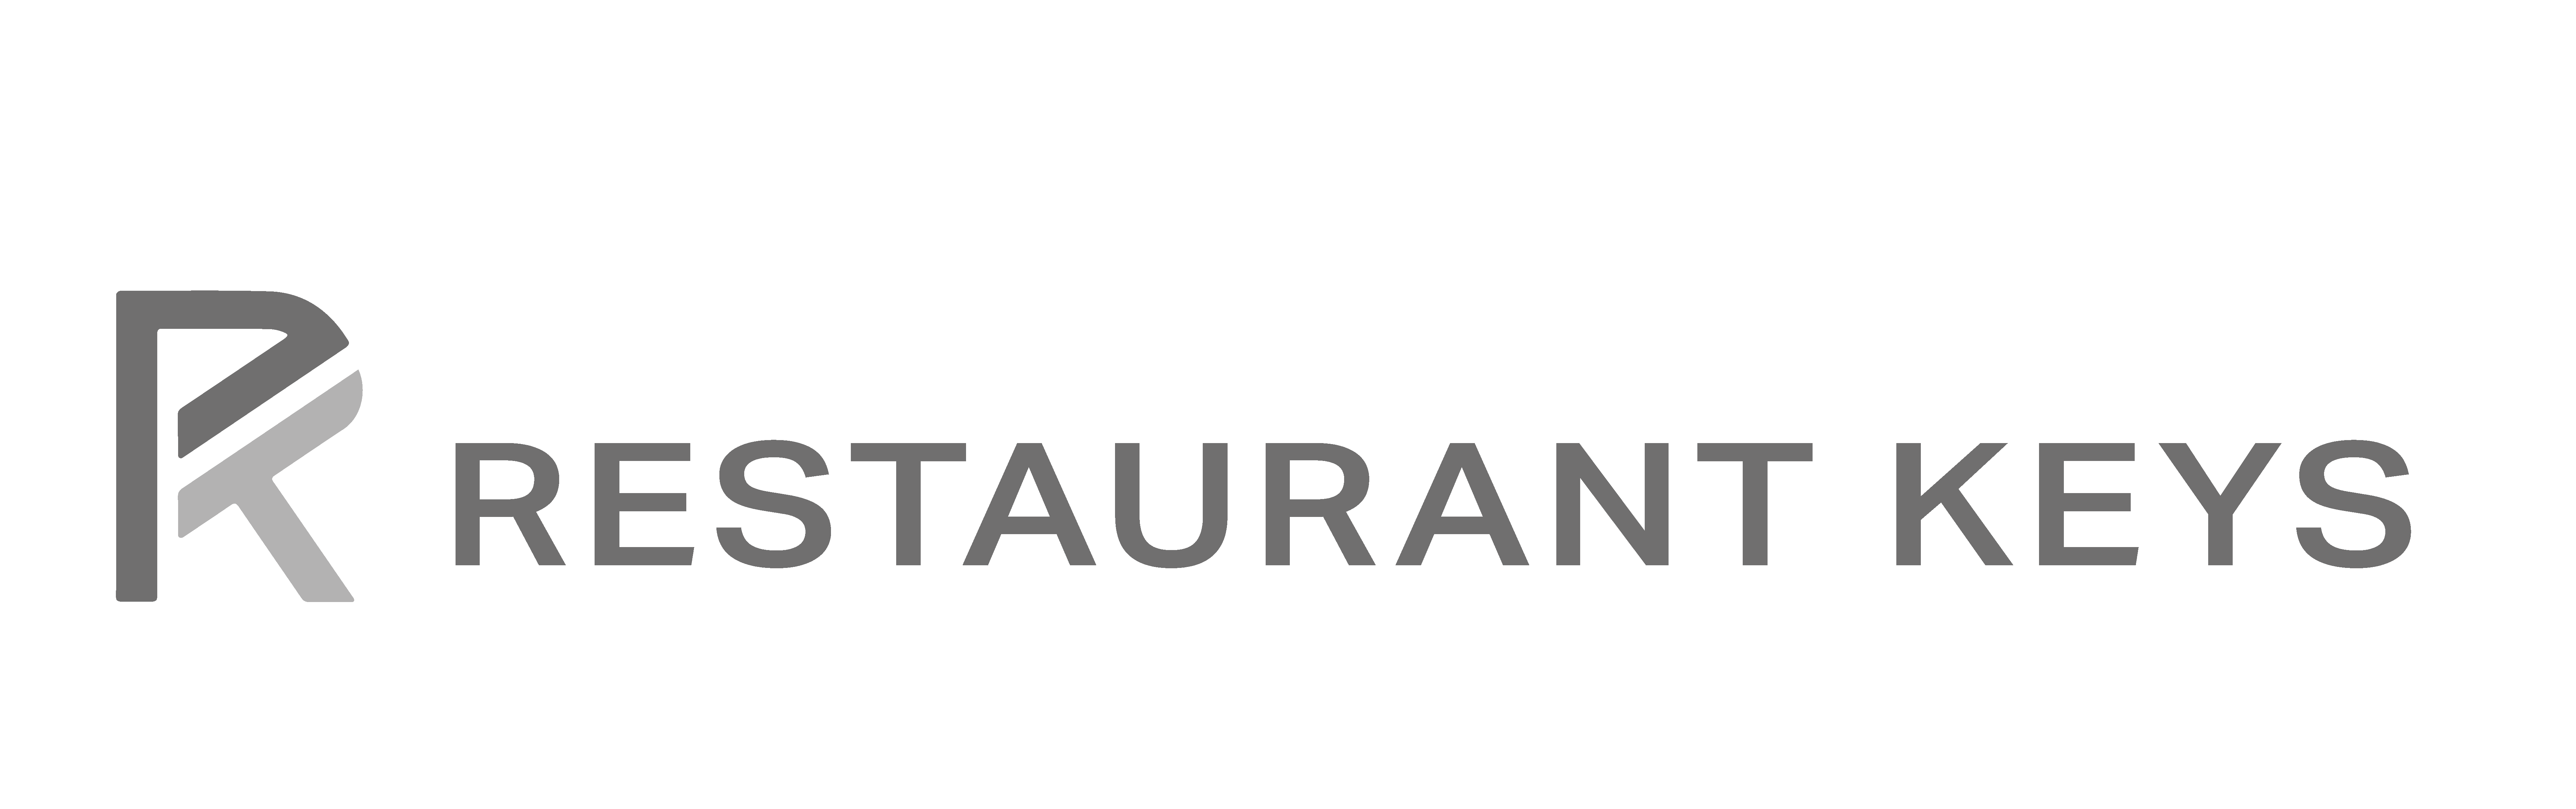 Restaurant Keys Logo